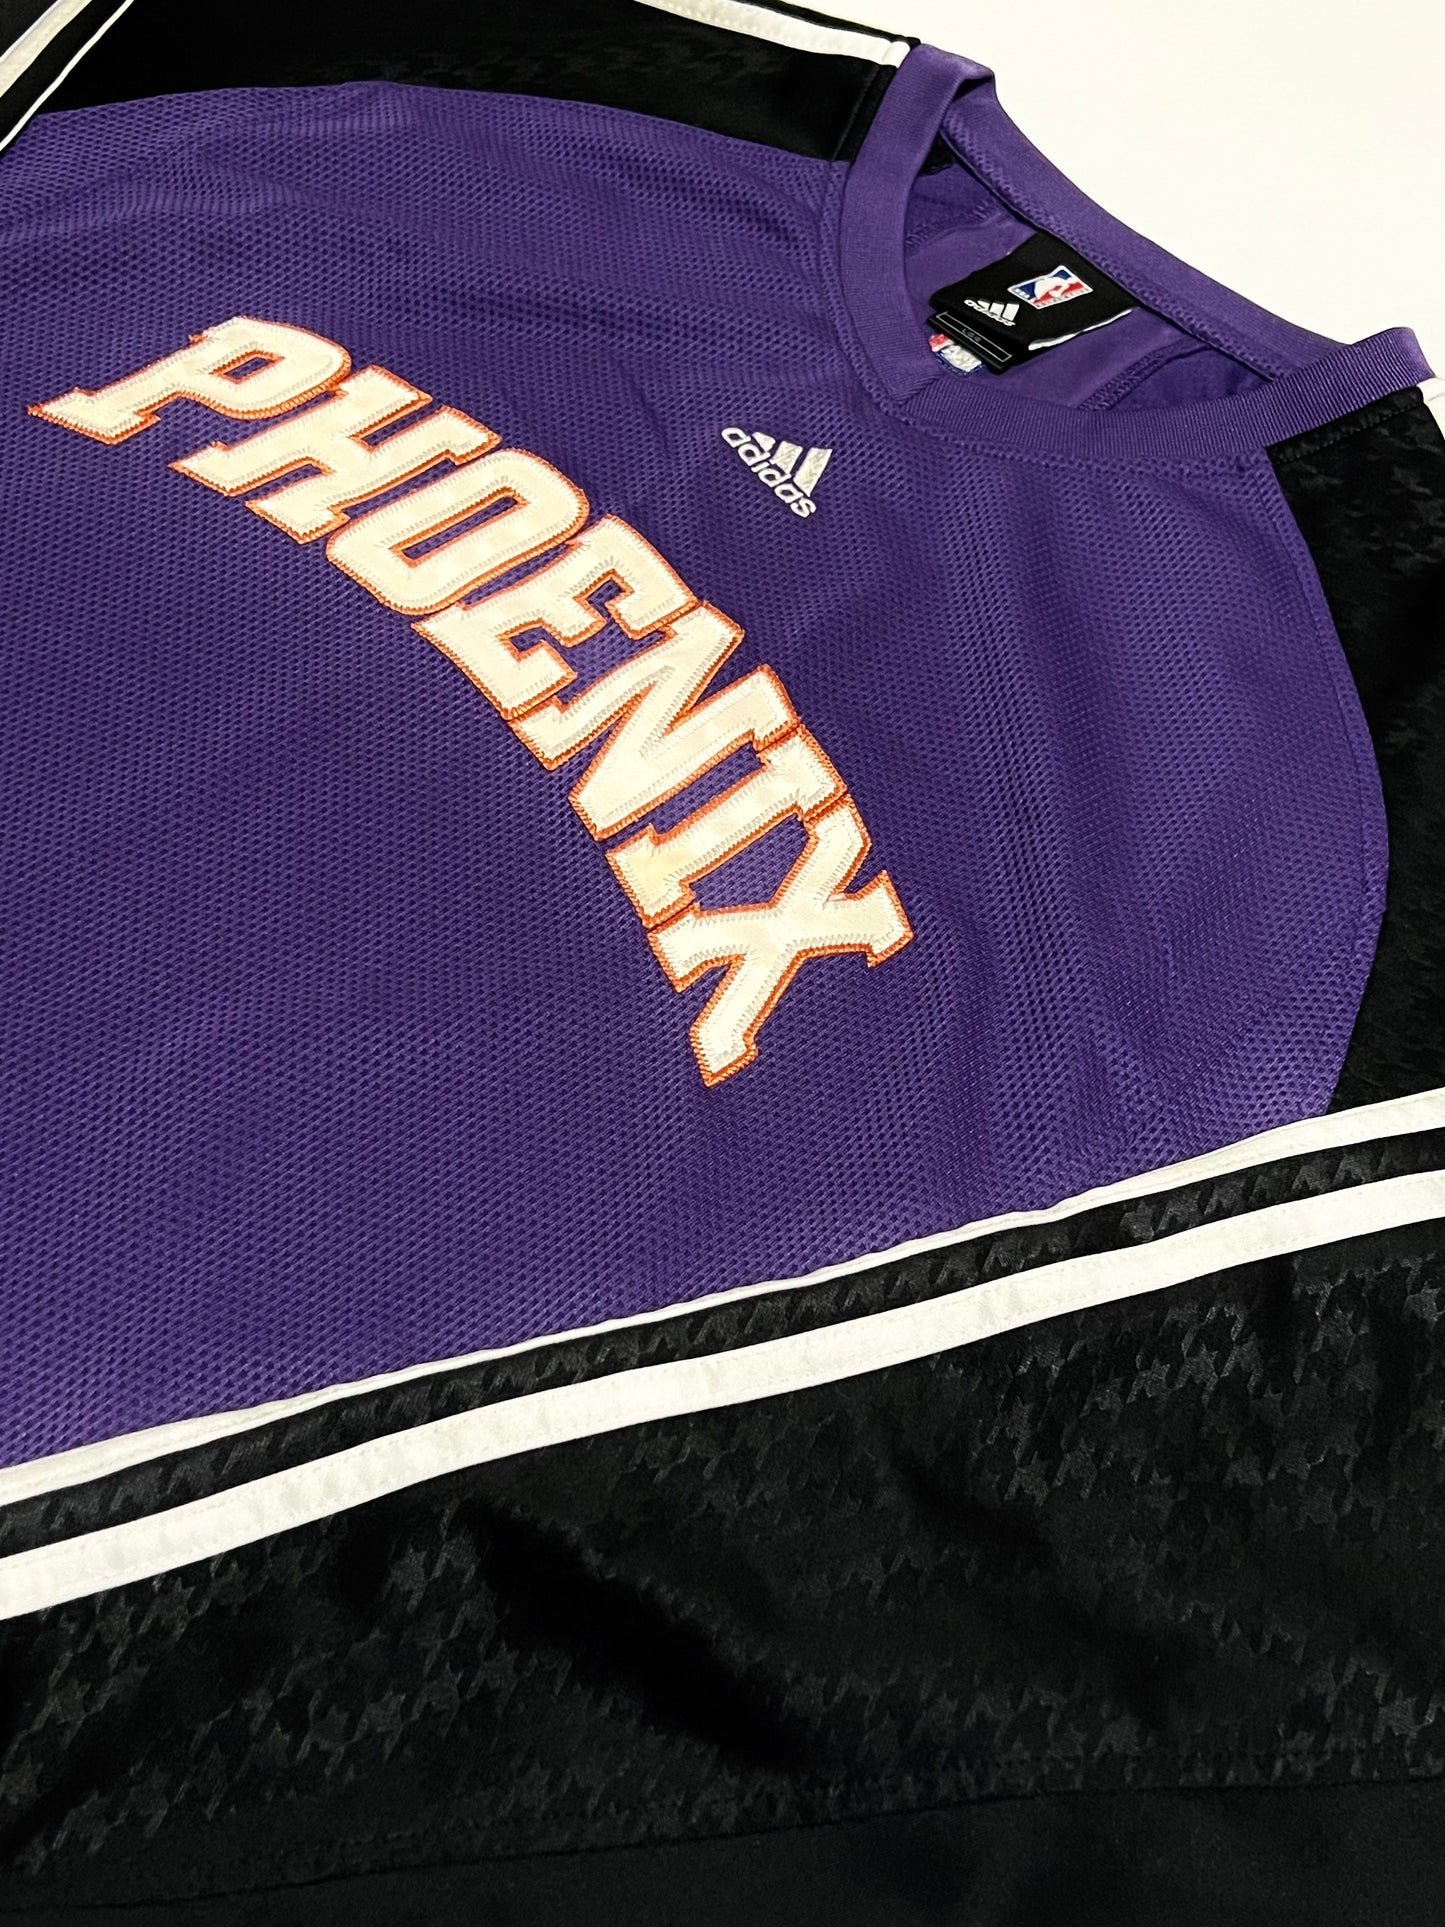 Phoenix Suns Adidas Warm Up Long Sleeve Shirt - L